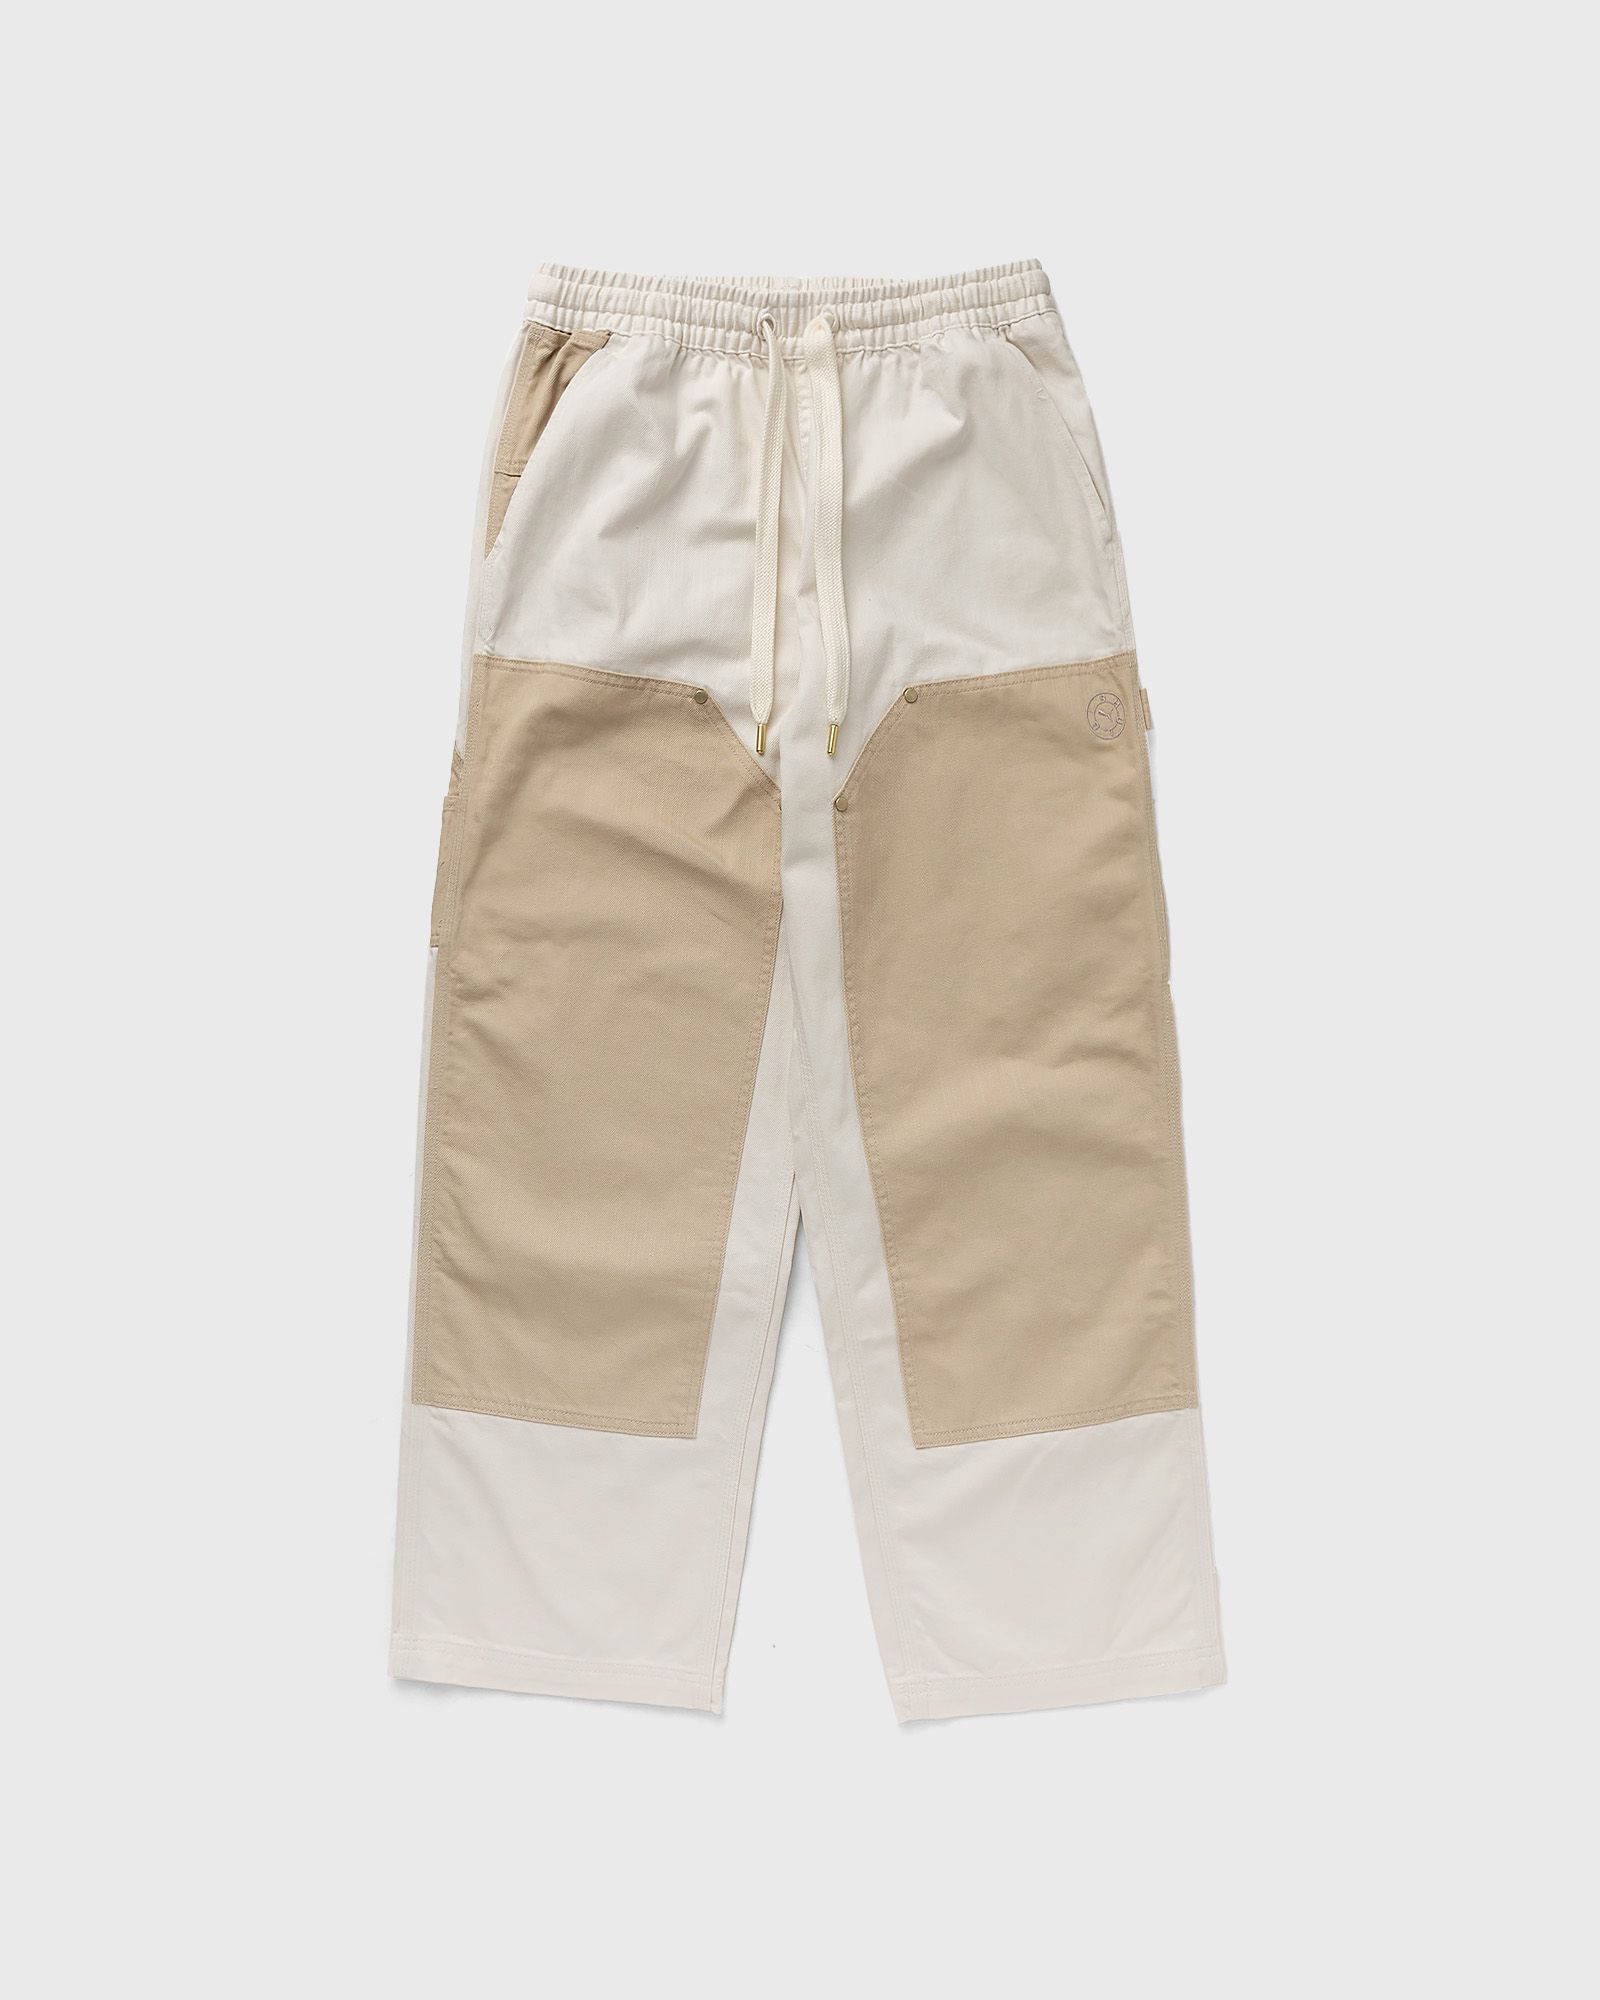 Puma - x rhuigi double knee pants men casual pants white|beige in größe:l